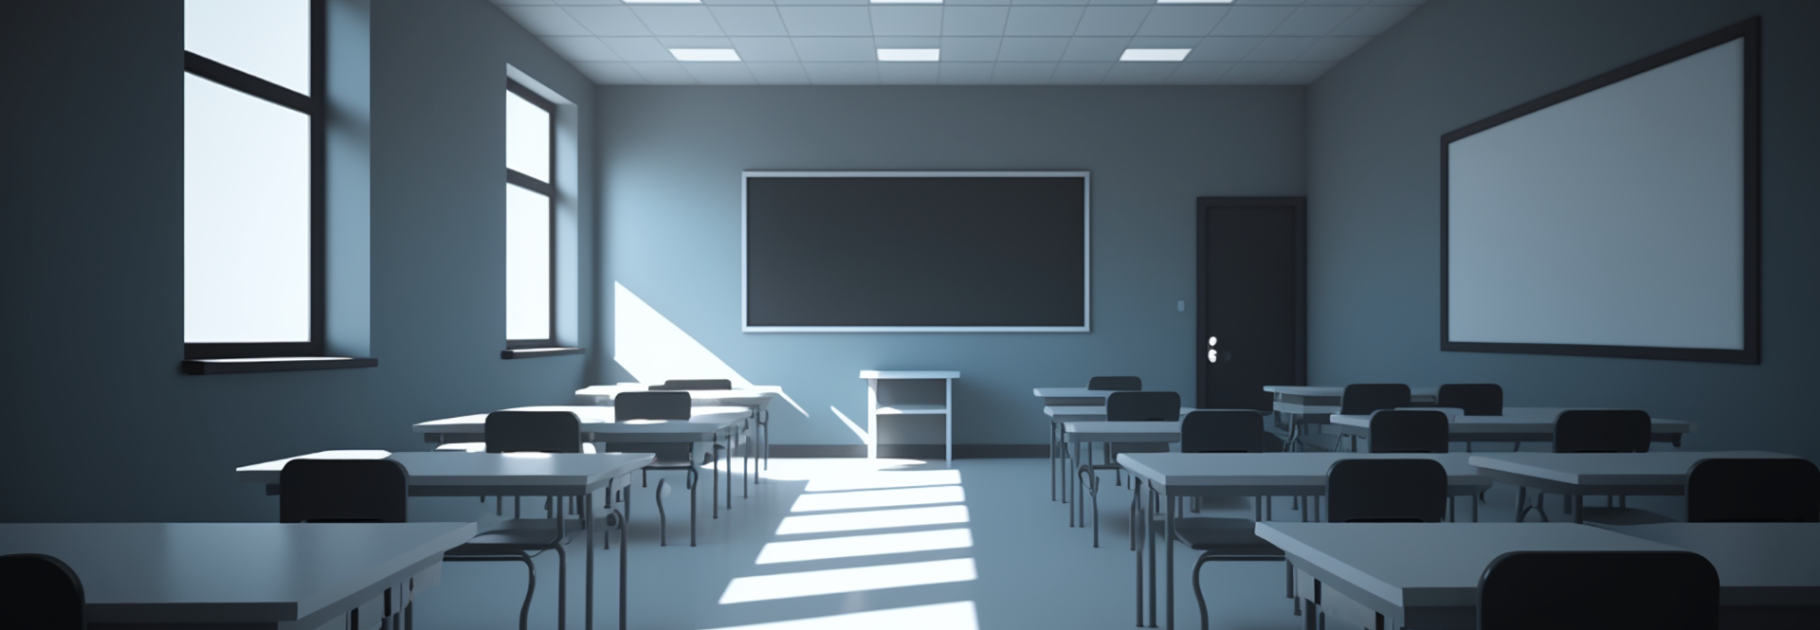 —Pngtree—classroom university classroom background_2151058